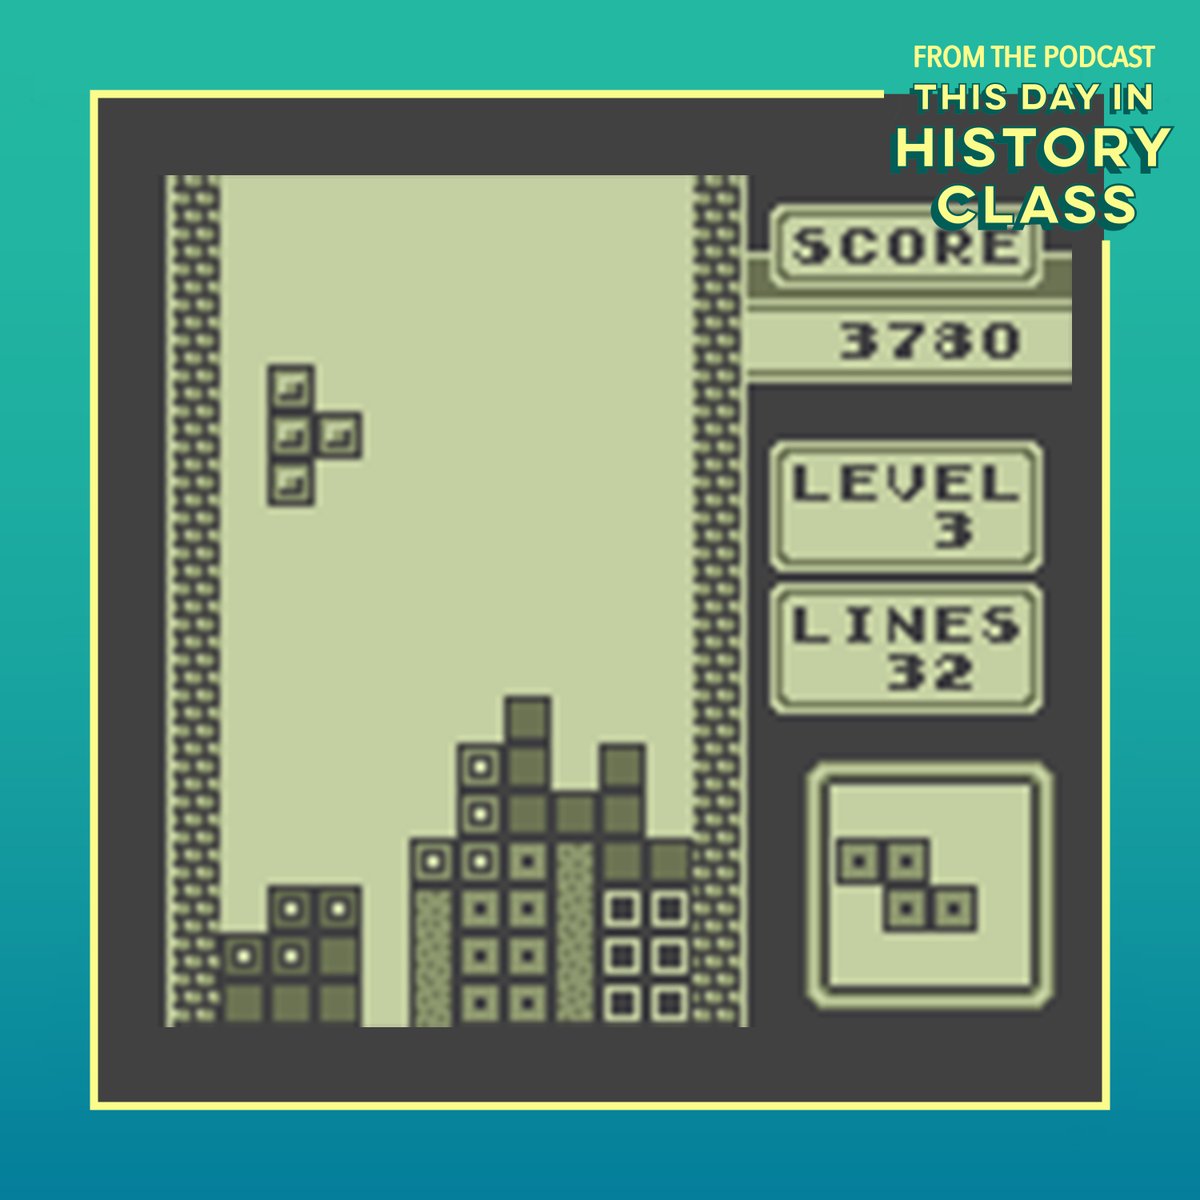 On this day in 1989, Nintendo released the original Game Boy in Japan.

#Nintendo #GameBoy #NES #Handheld #HandheldConsole #VideoGames #8bit #Japan #SuperMario #Tetris #GunpeiYokoi #TDIHC #ThisDayInHistory #TodayInHistory #OnThisDay #April21

Listen now:
omny.fm/shows/this-day…